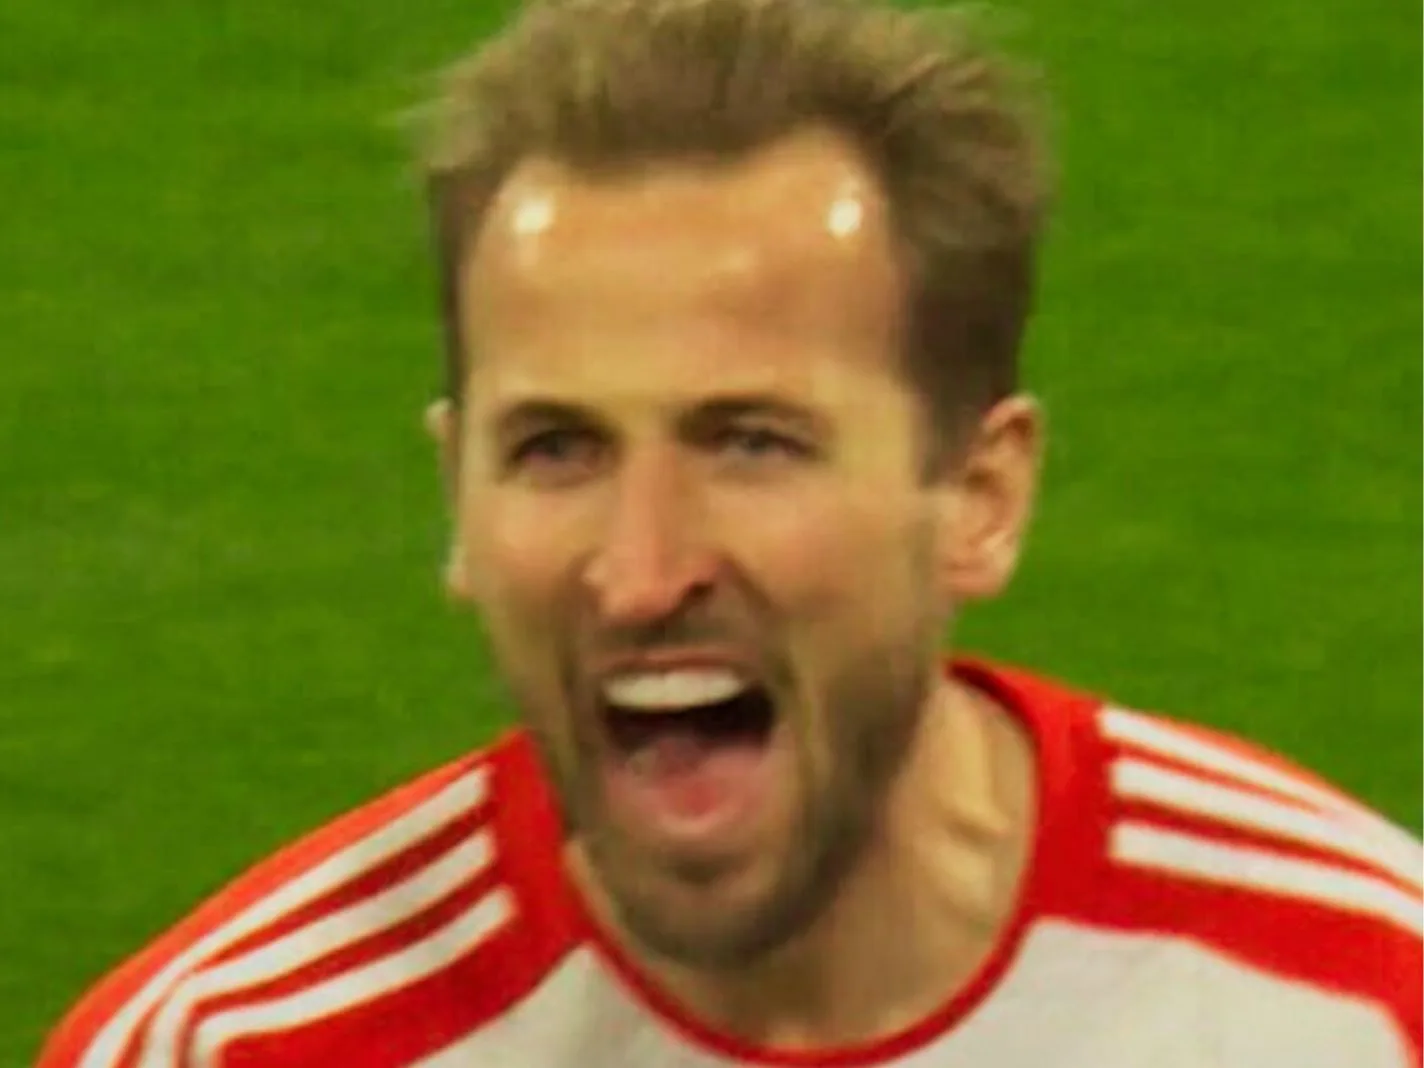 Harry Kane celebrating a goal in Bayern Munich kit